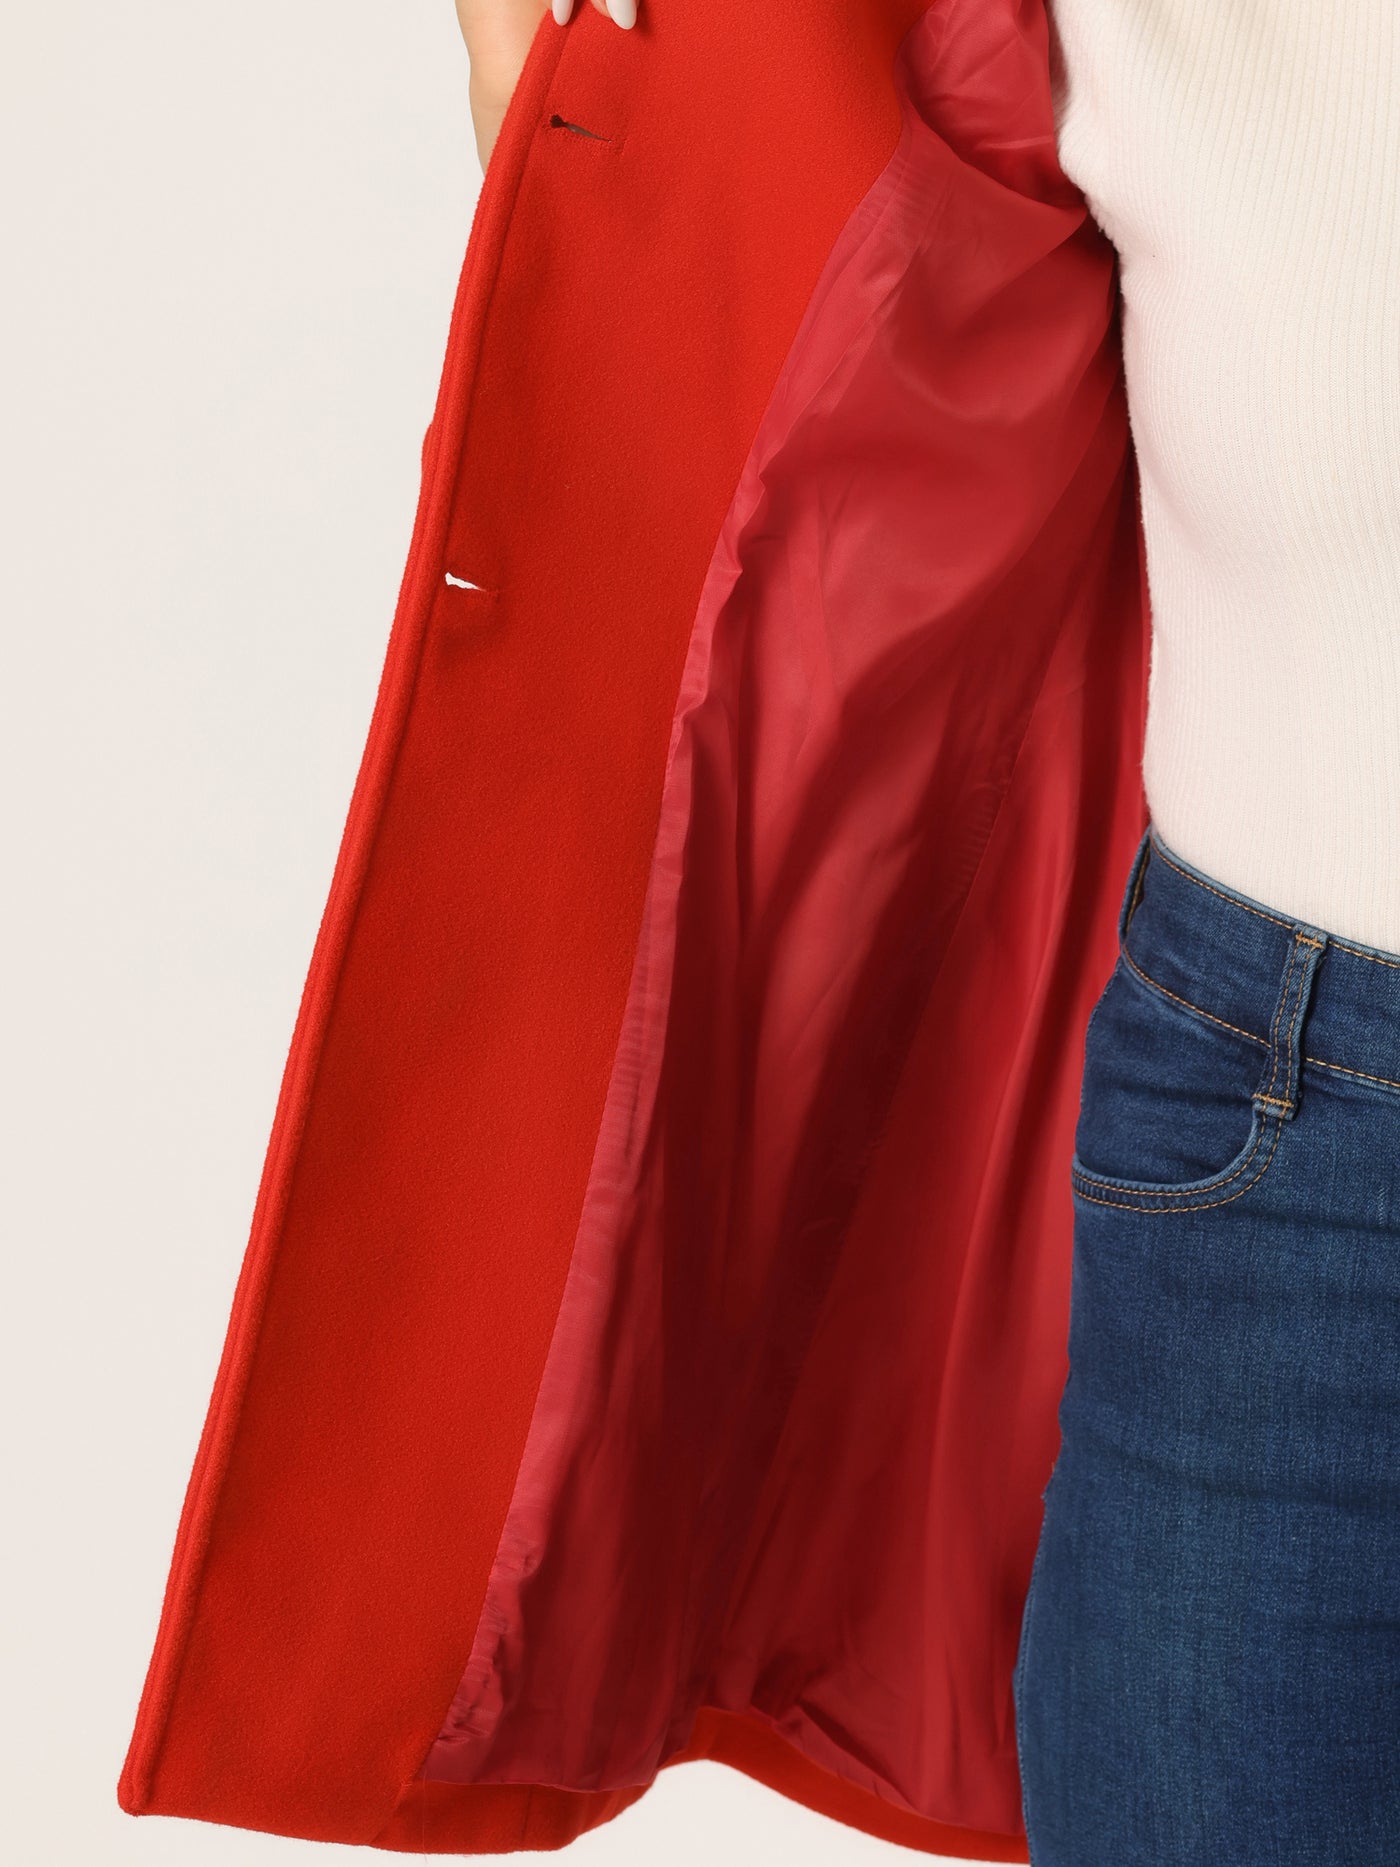 Allegra K Women's Turn-Down Collar Single Breasted Outwear Winter Coat with  Pockets 